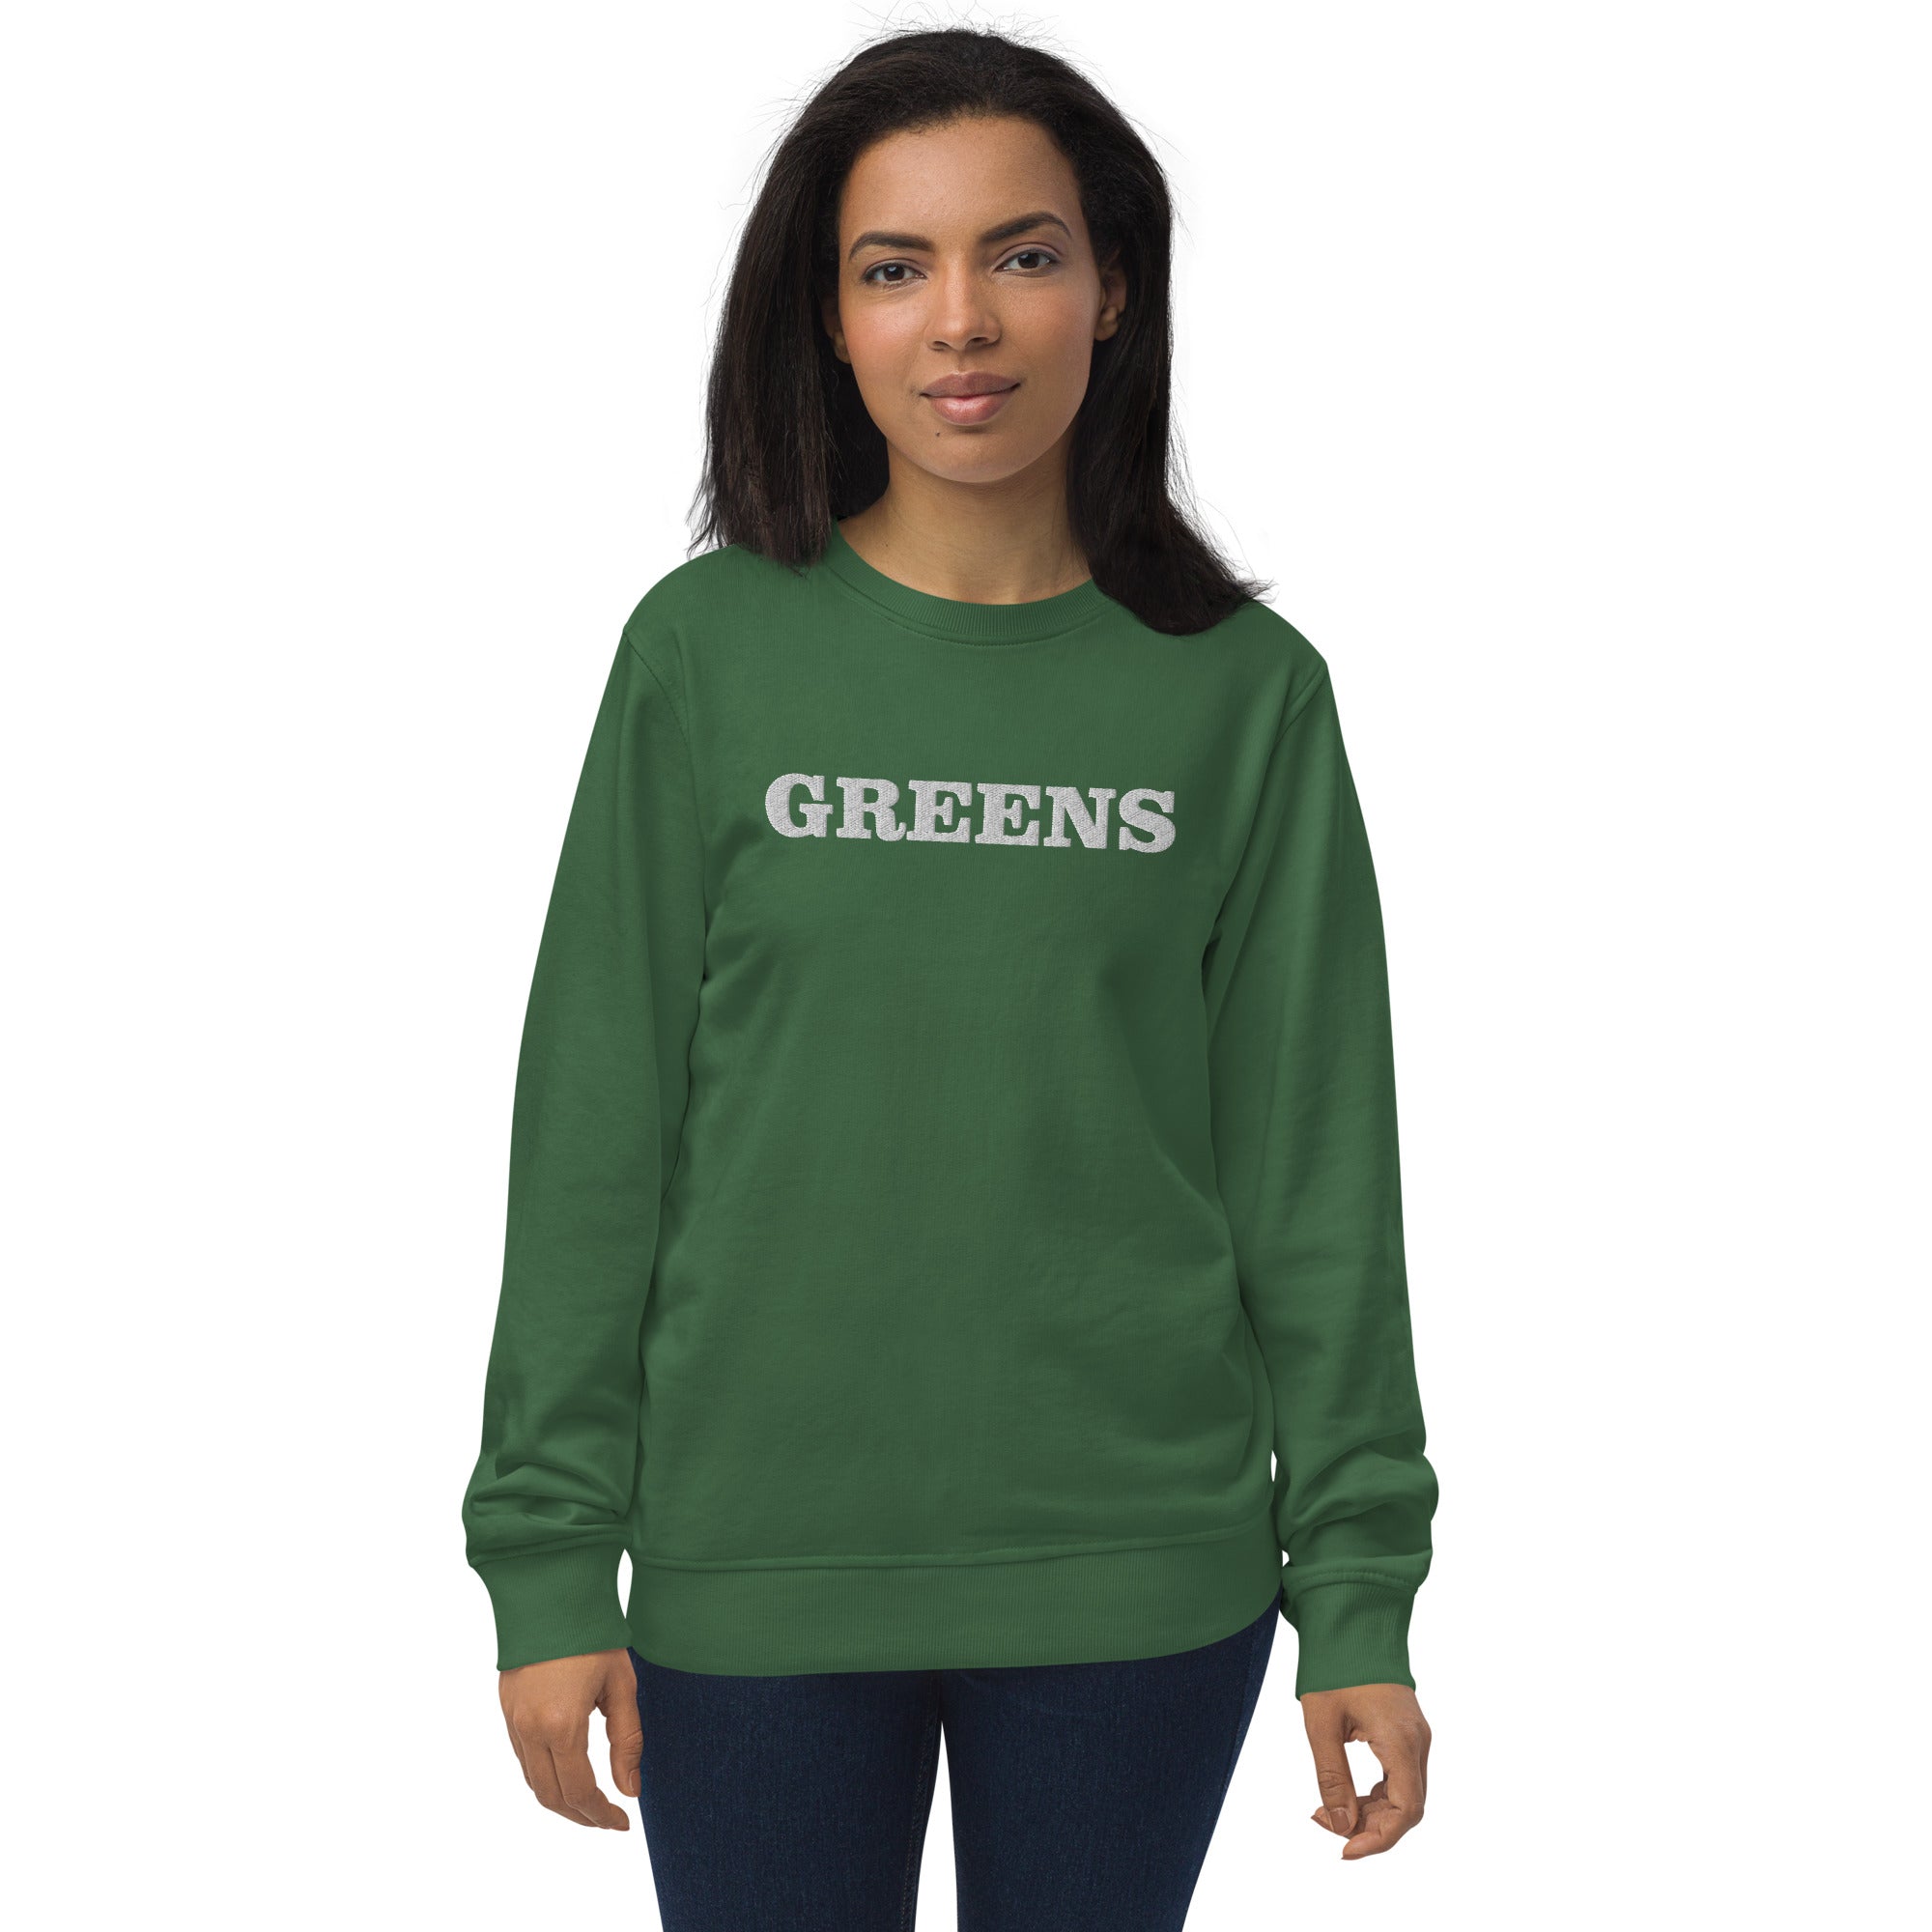 Greens Unisex organic sweatshirt